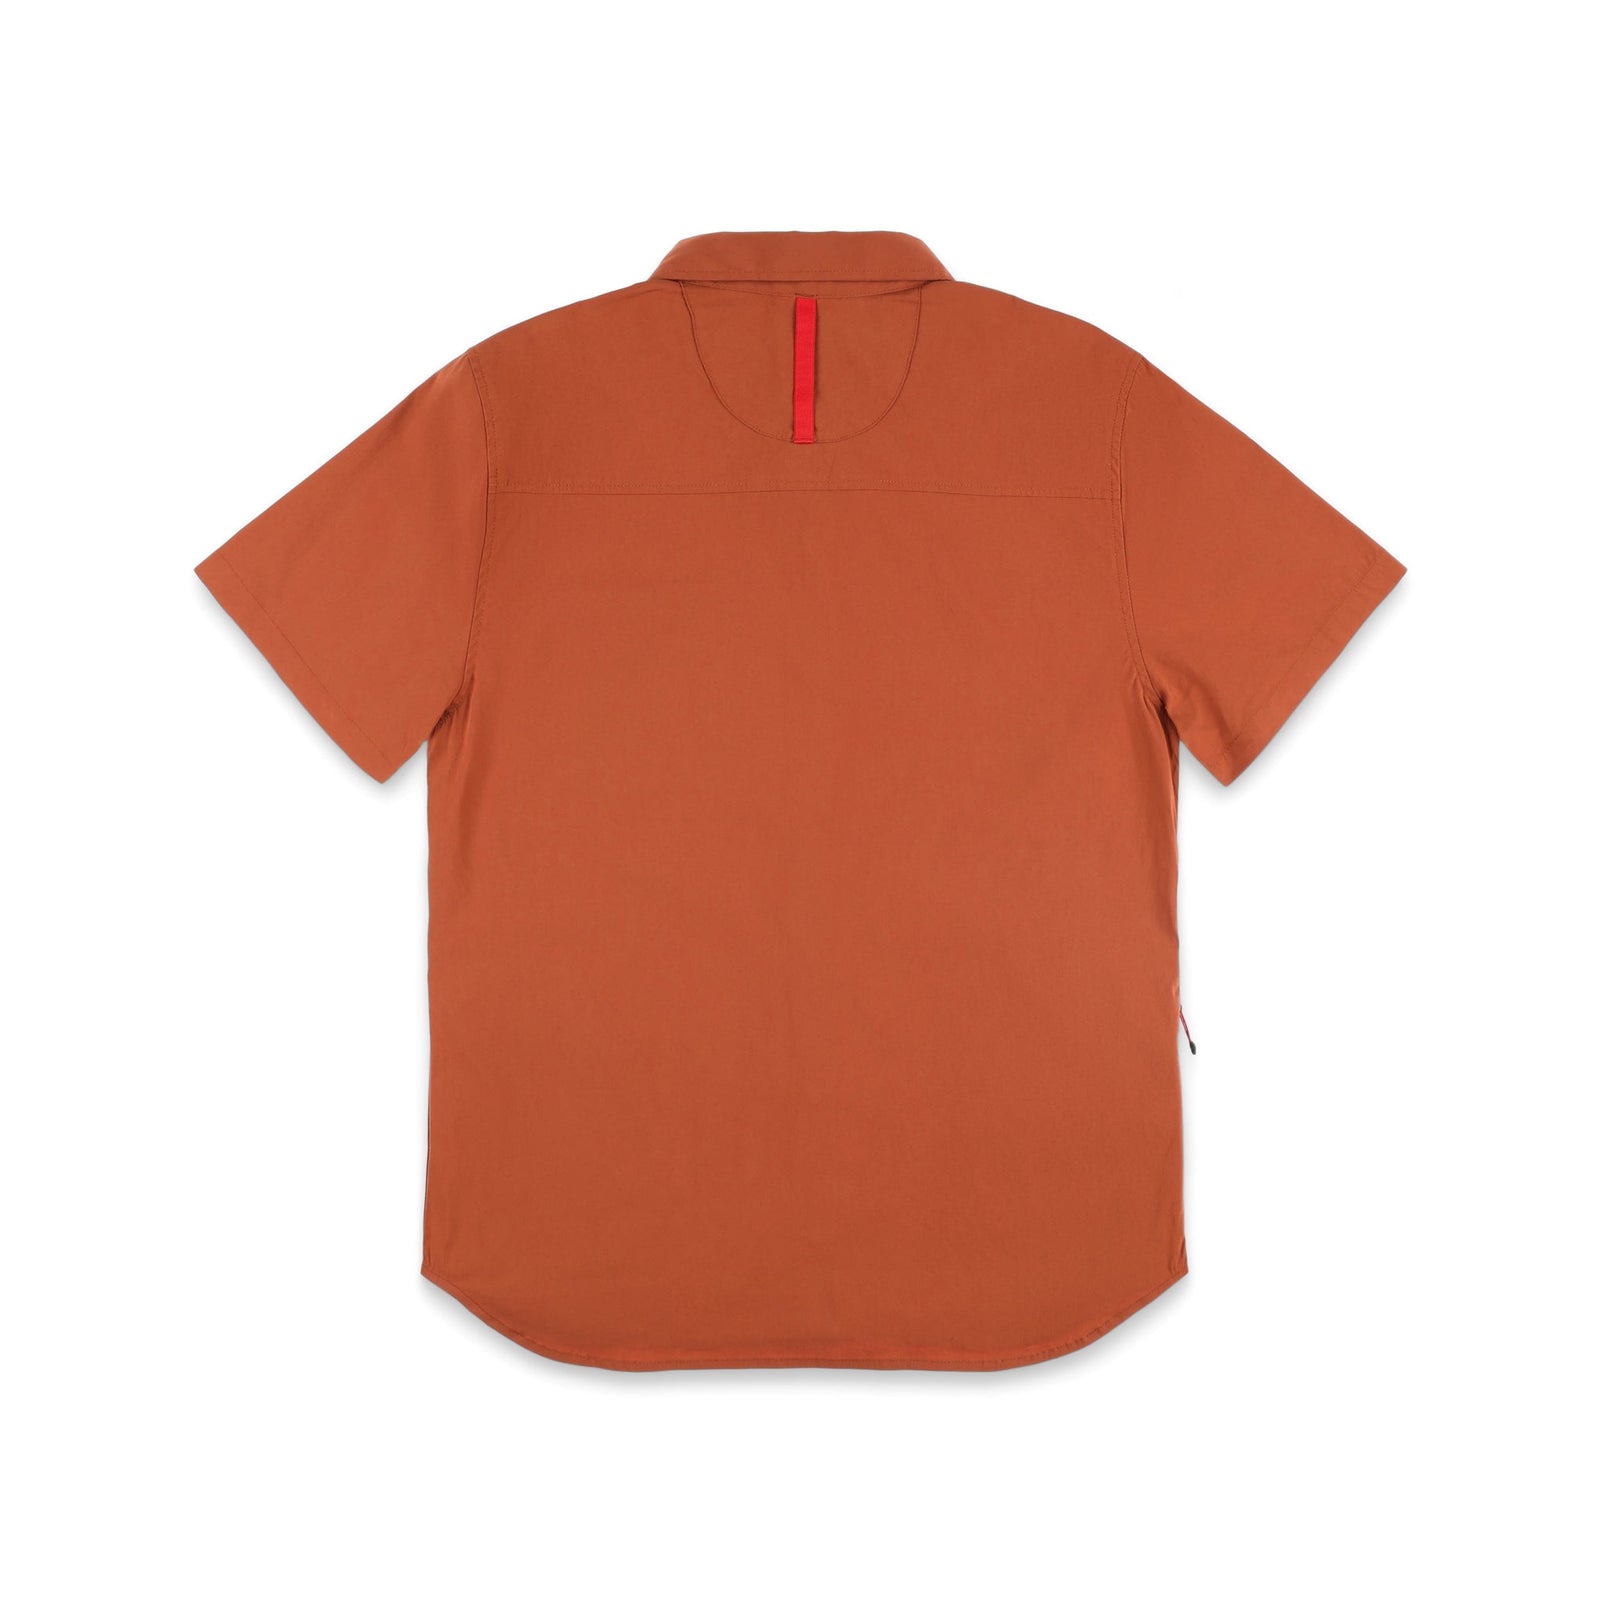 PackFast Packing Band on Topo Designs Men's Global Shirt Short Sleeve 30+ UPF rated travel shirt in "Brick" orange.